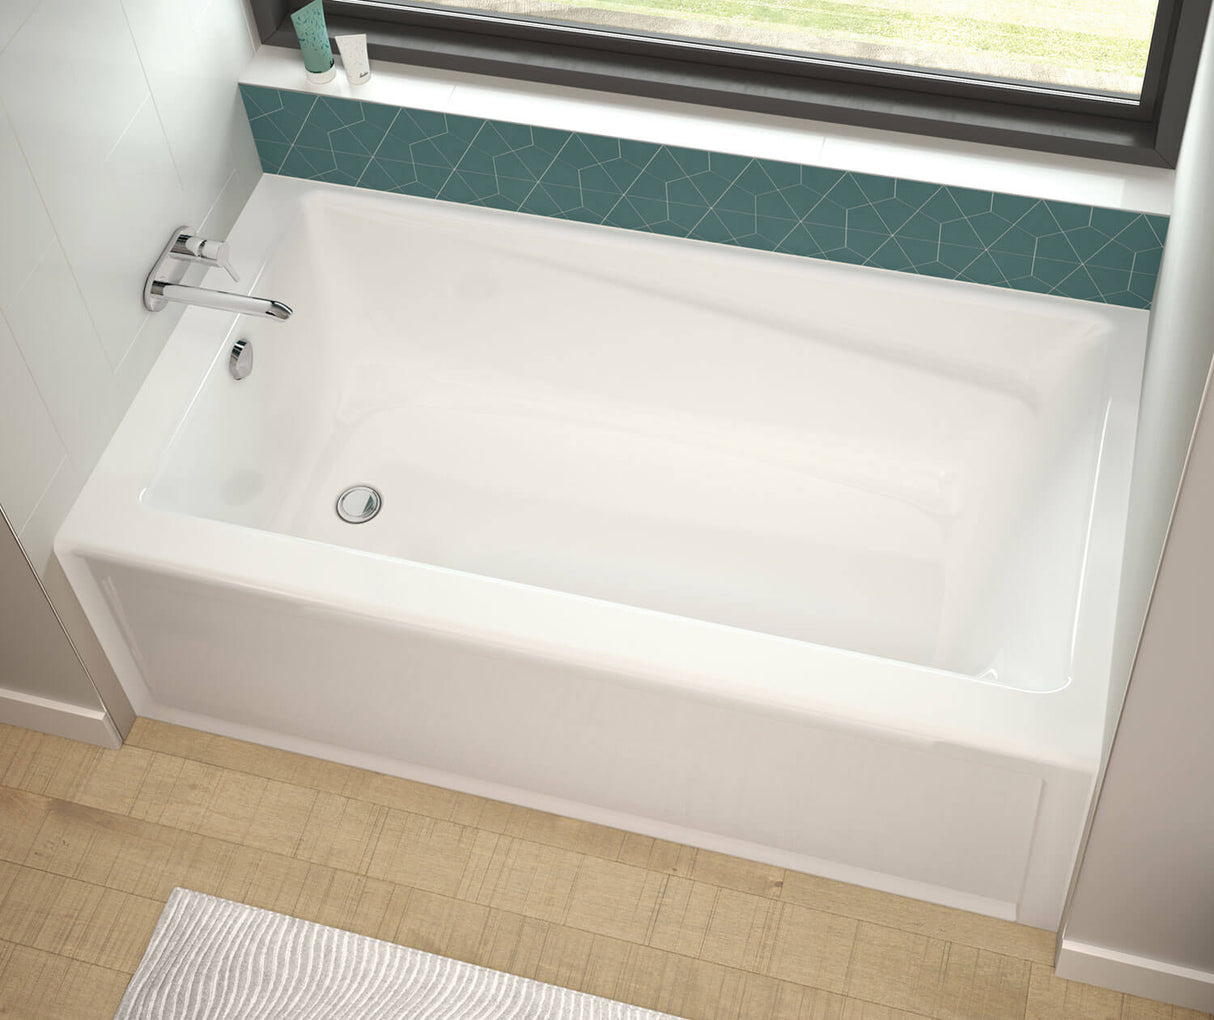 MAAX 106173-003-001-101 Exhibit 6036 IFS AFR Acrylic Alcove Right-Hand Drain Whirlpool Bathtub in White